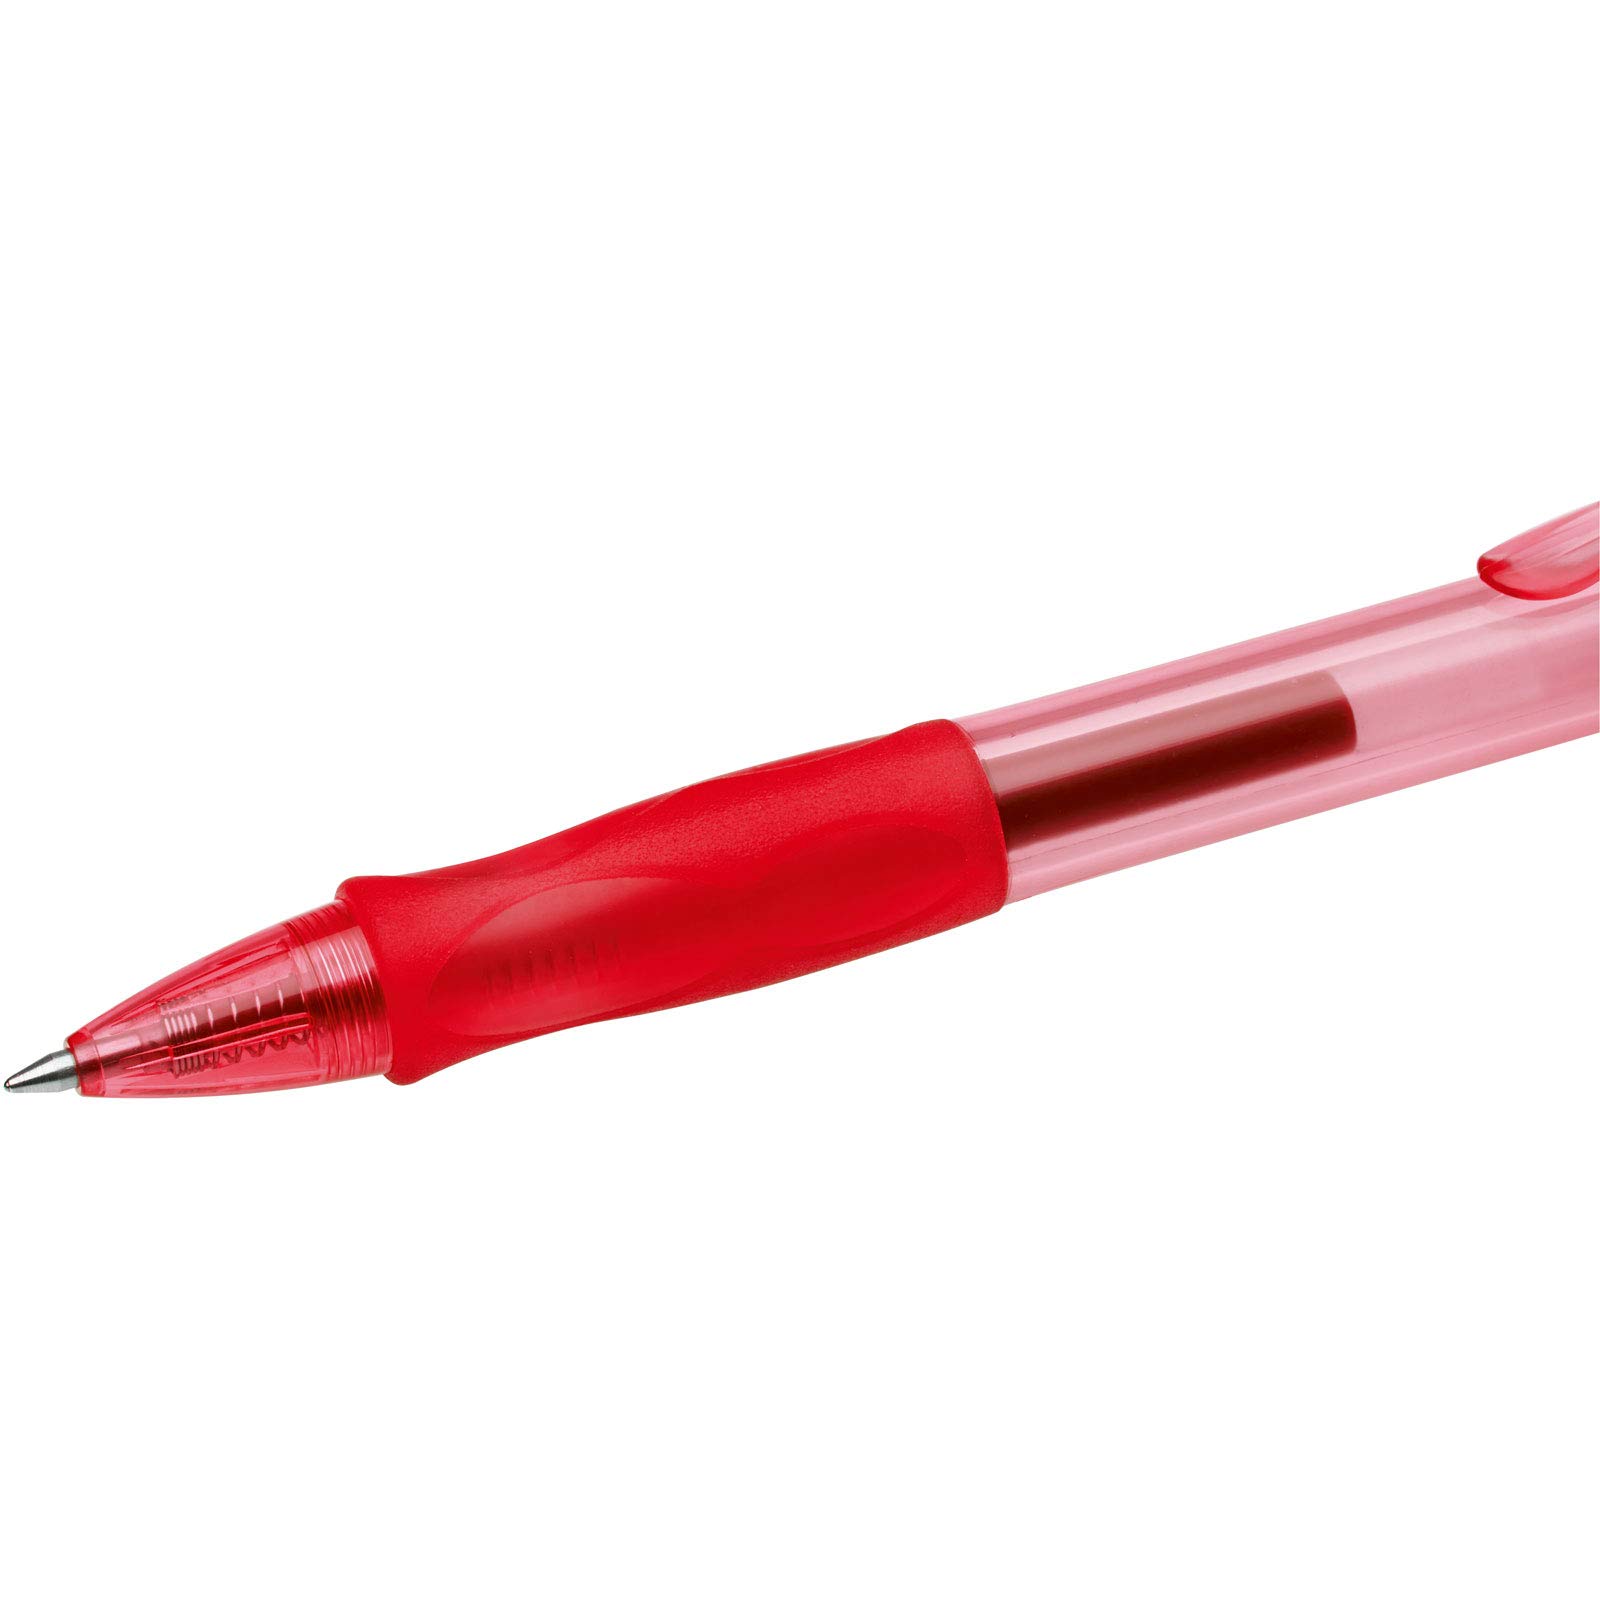 BIC Gel-ocity Retractable Gel Pen, Medium Point (0.7mm), Assorted Colors, Comfortable, Contoured Grip, 25-Count